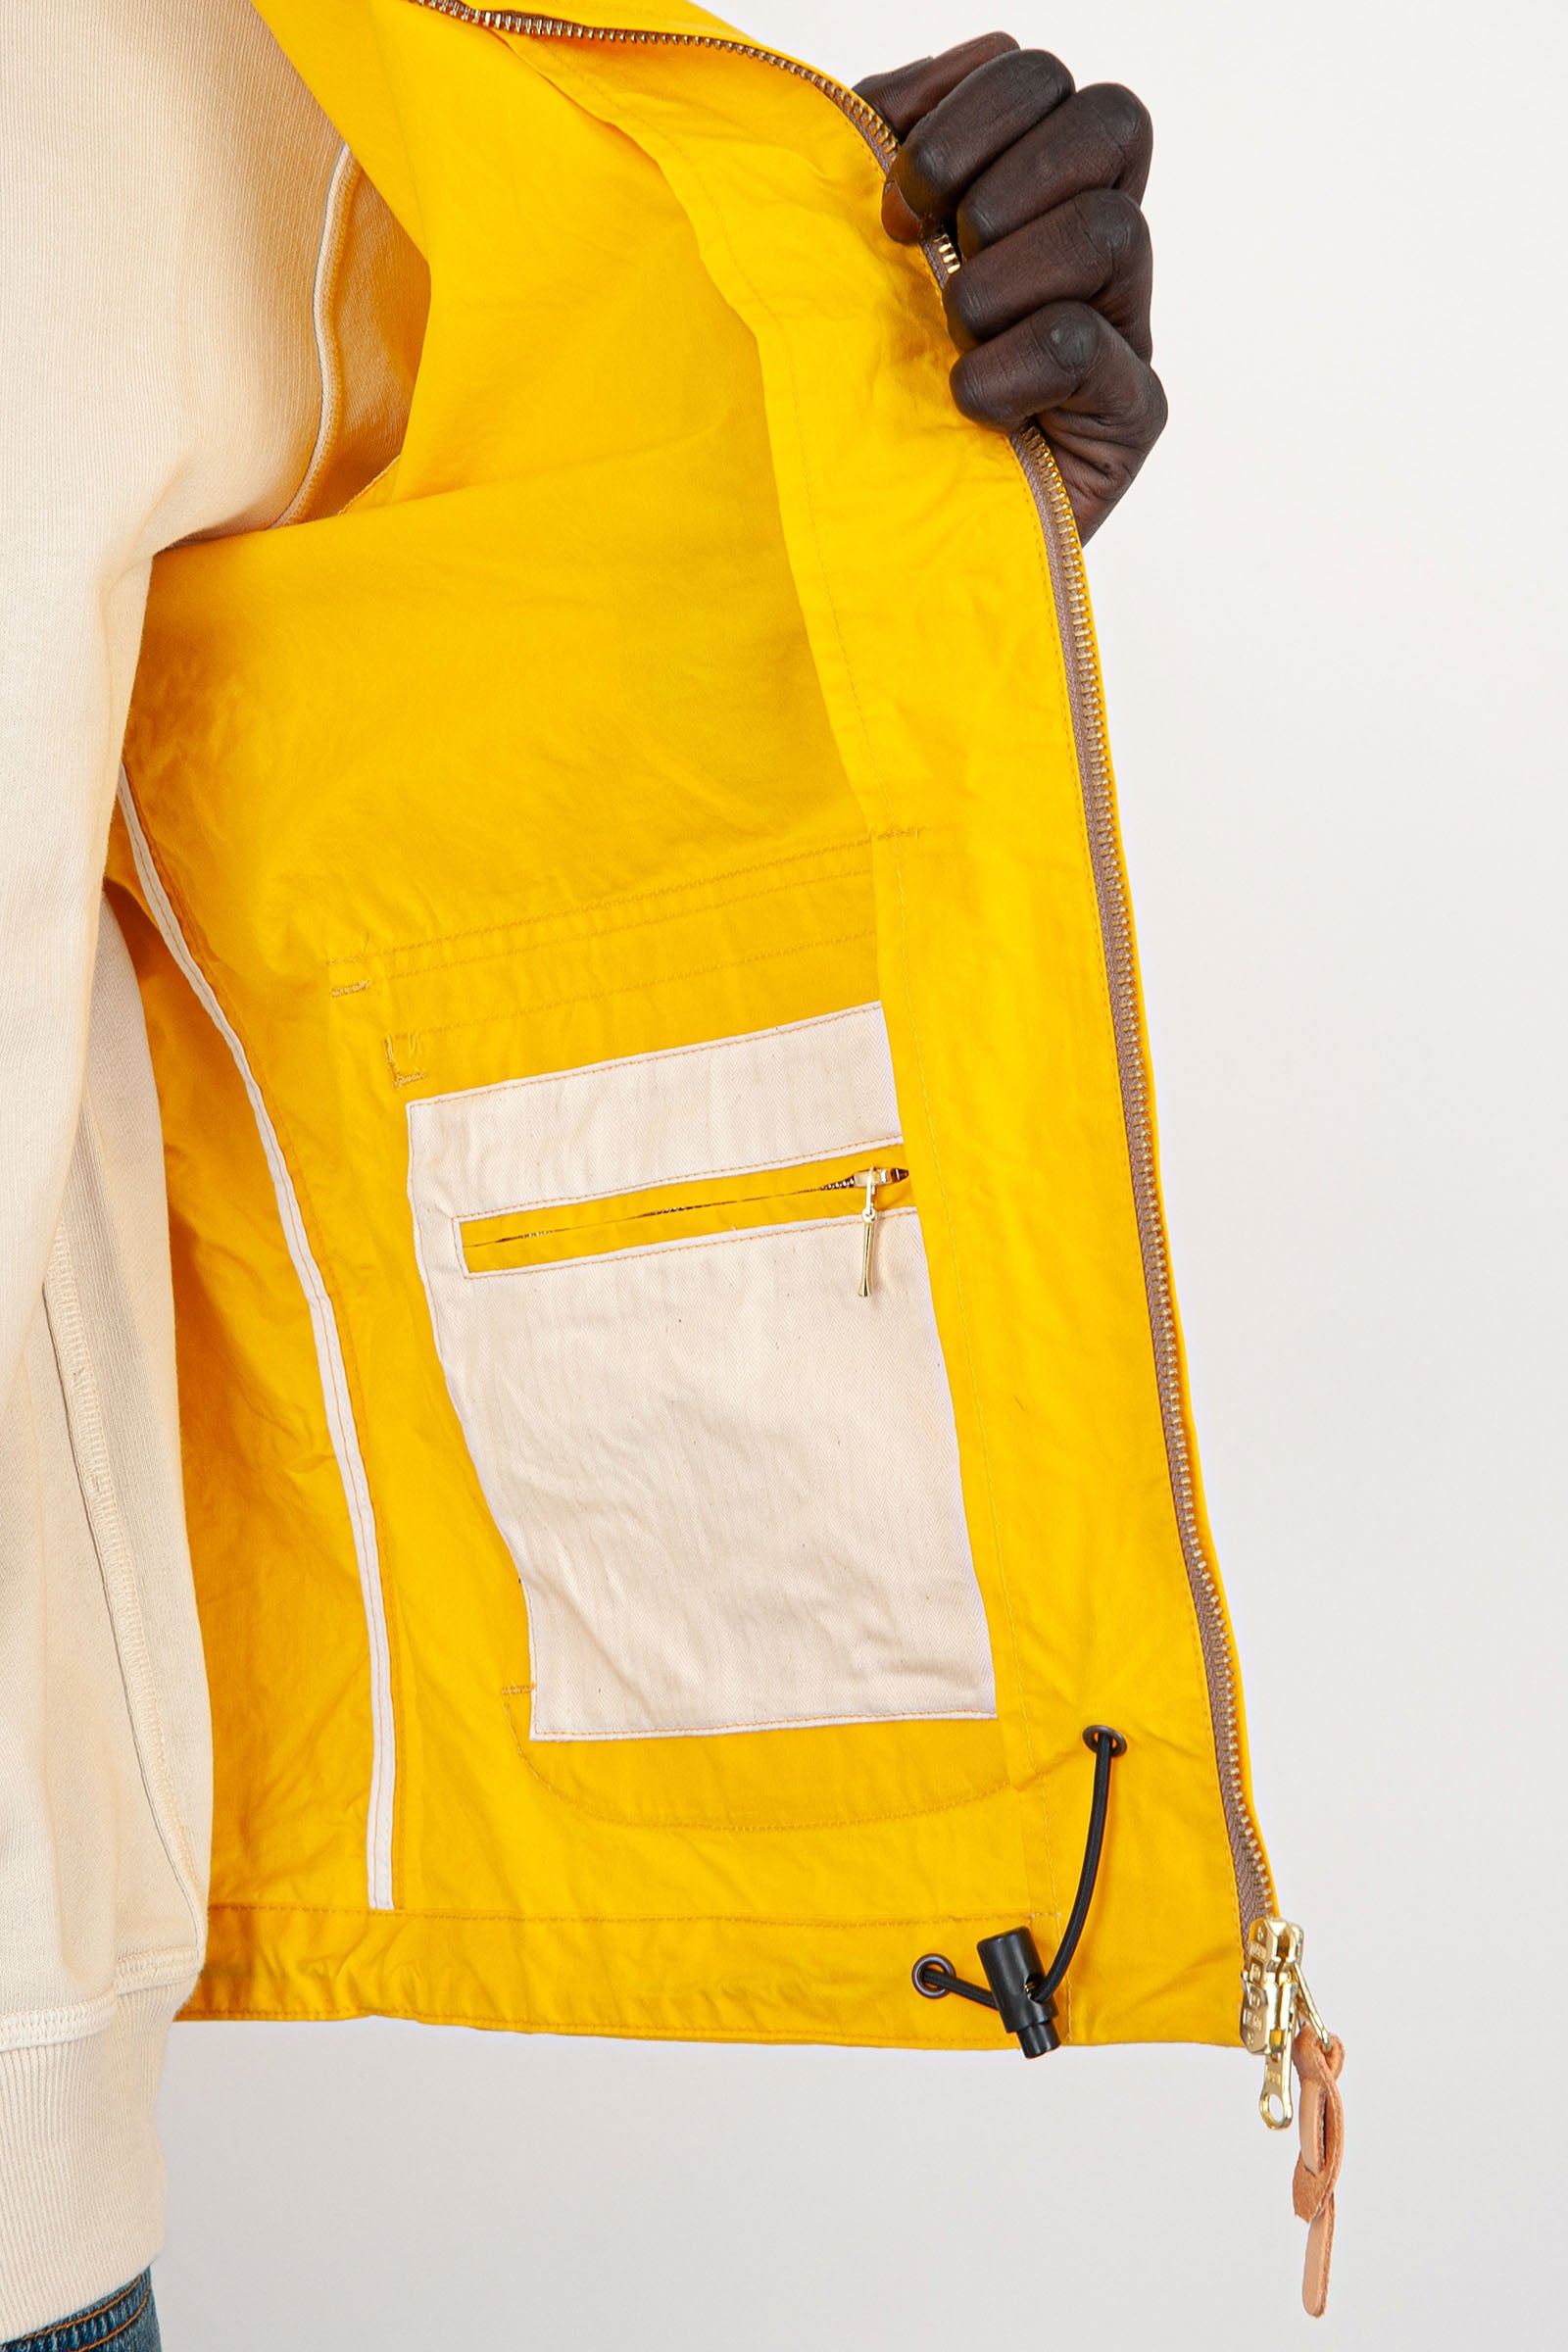 Manifattura Ceccarelli Blazer Coat With Hood Yellow Cotton - 7